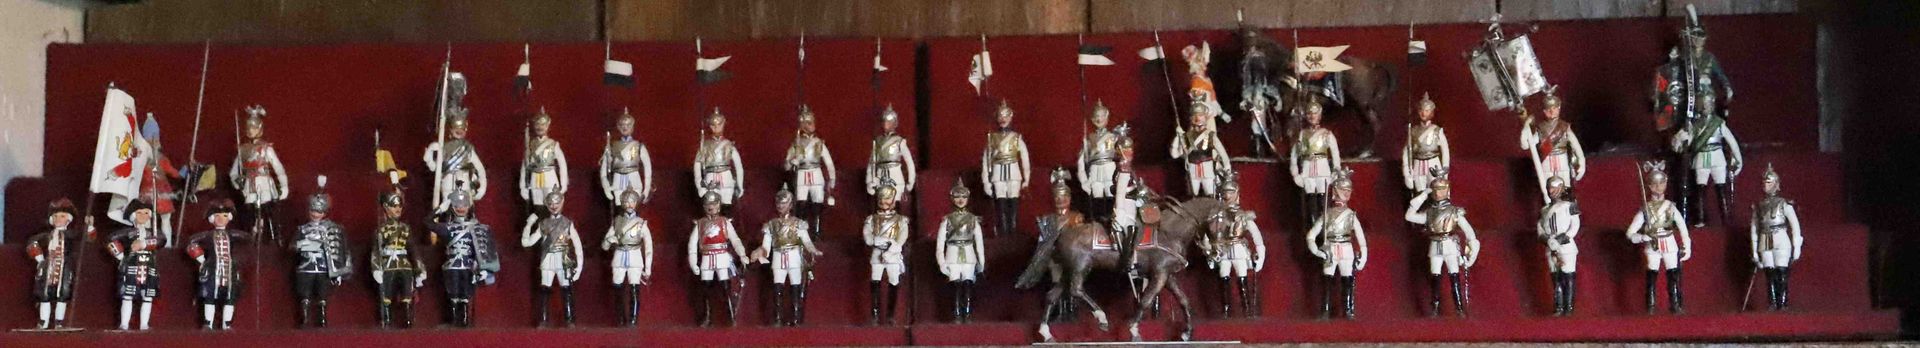 Null Lead figures

German cuirassiers regiment - Study of uniforms

Around 1900